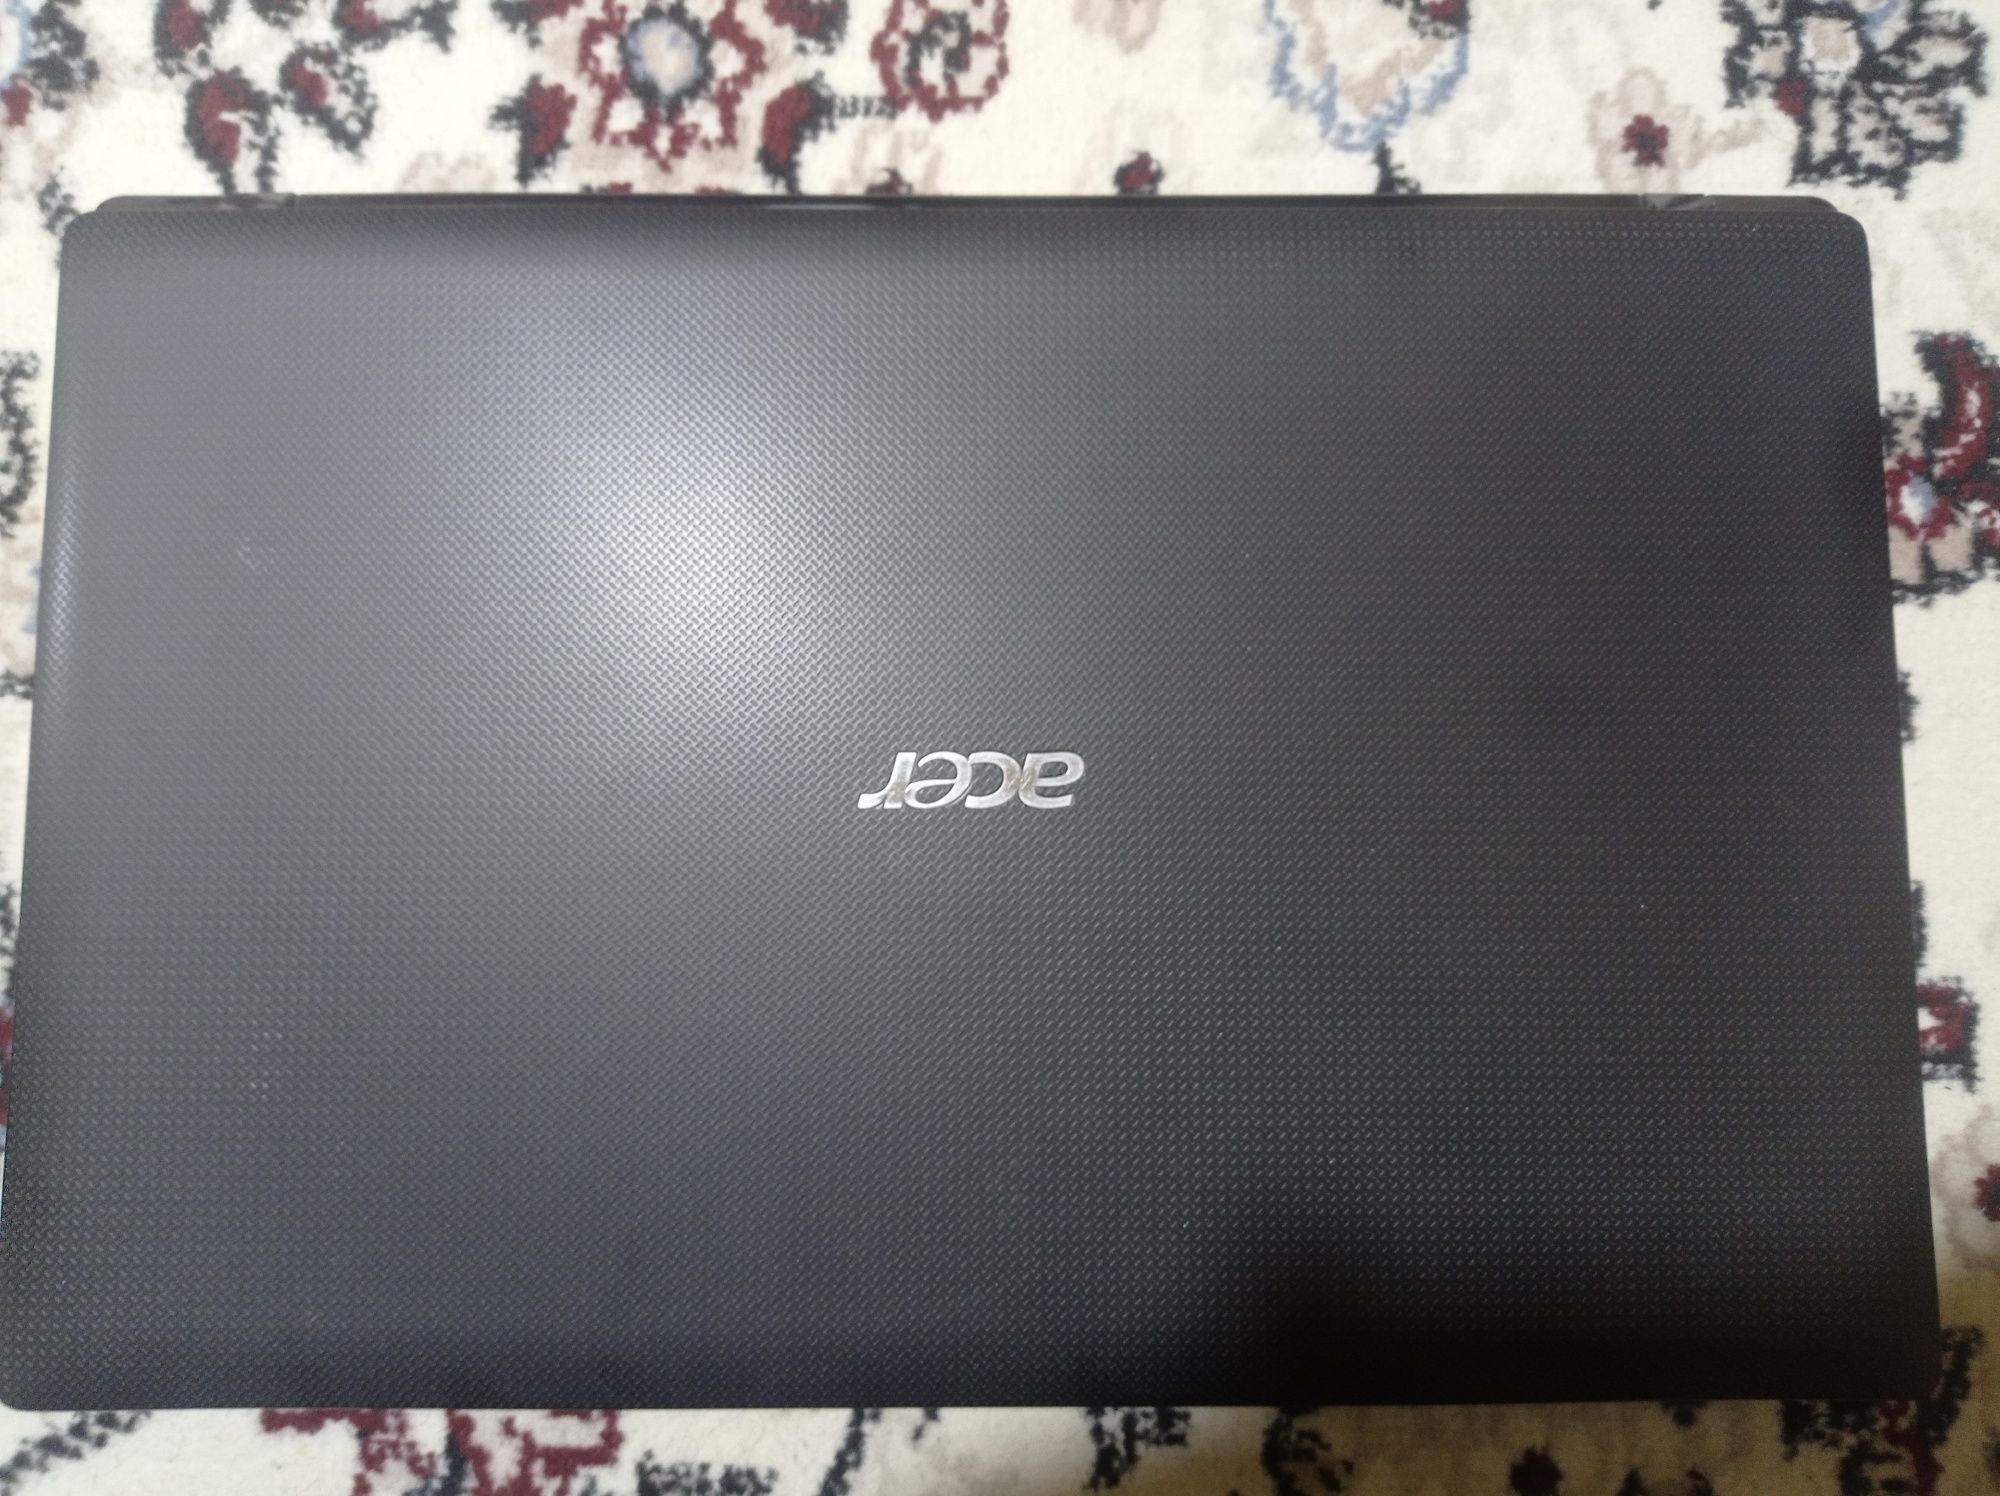 Notebook Acer aspire 7560g